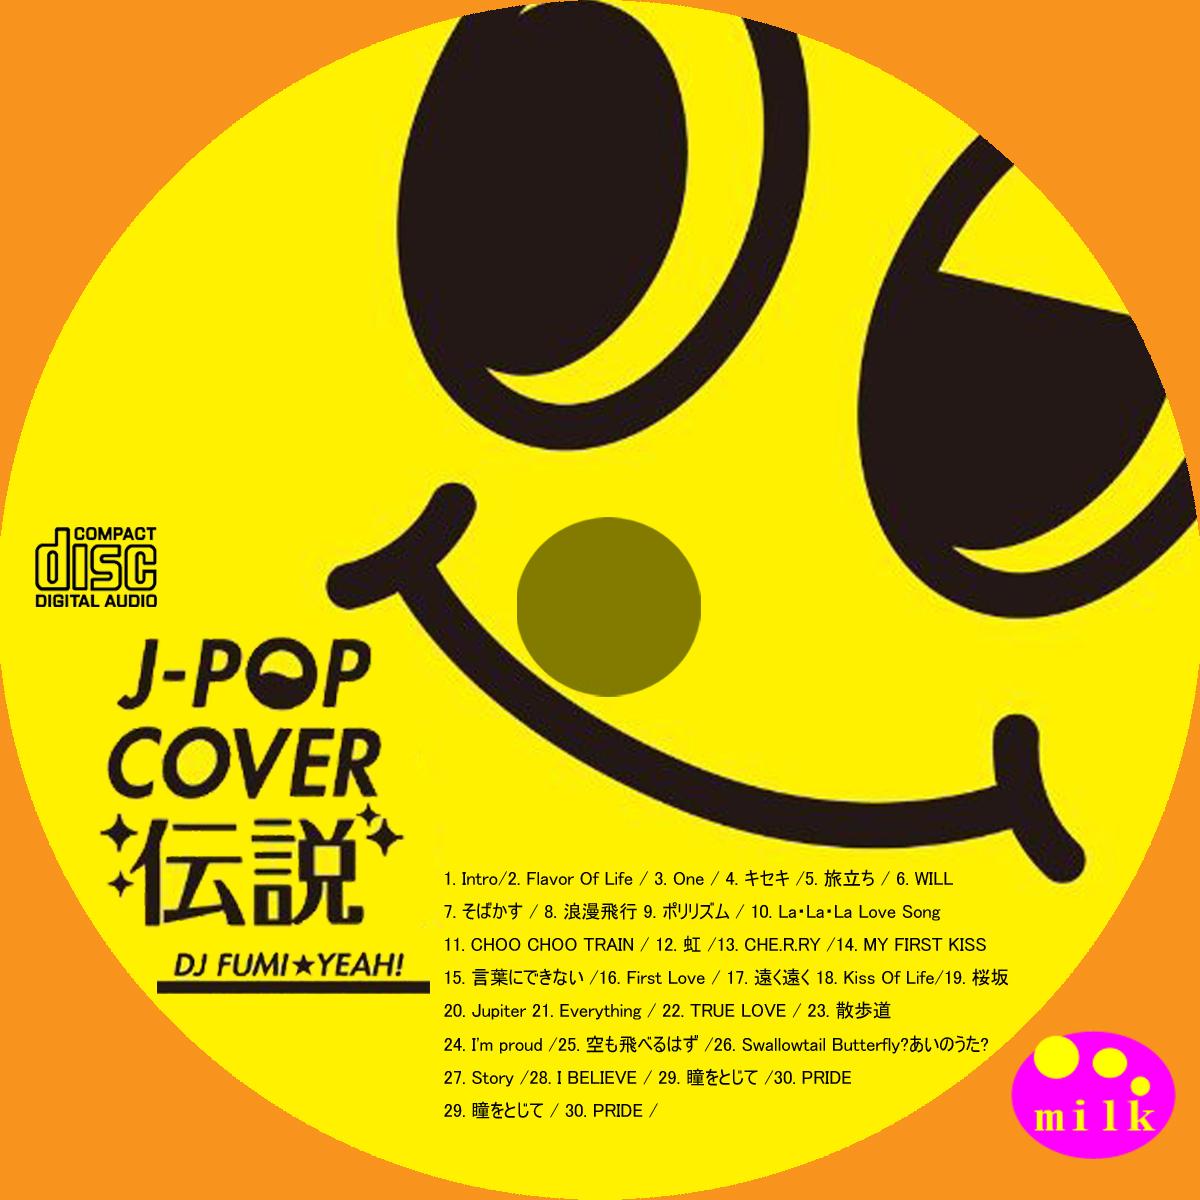 J-POPカバー伝説 BEST mixed by DJ FUMI★YEAH！ ダイキサウンド 最安値比較: 宮島distancのブログ